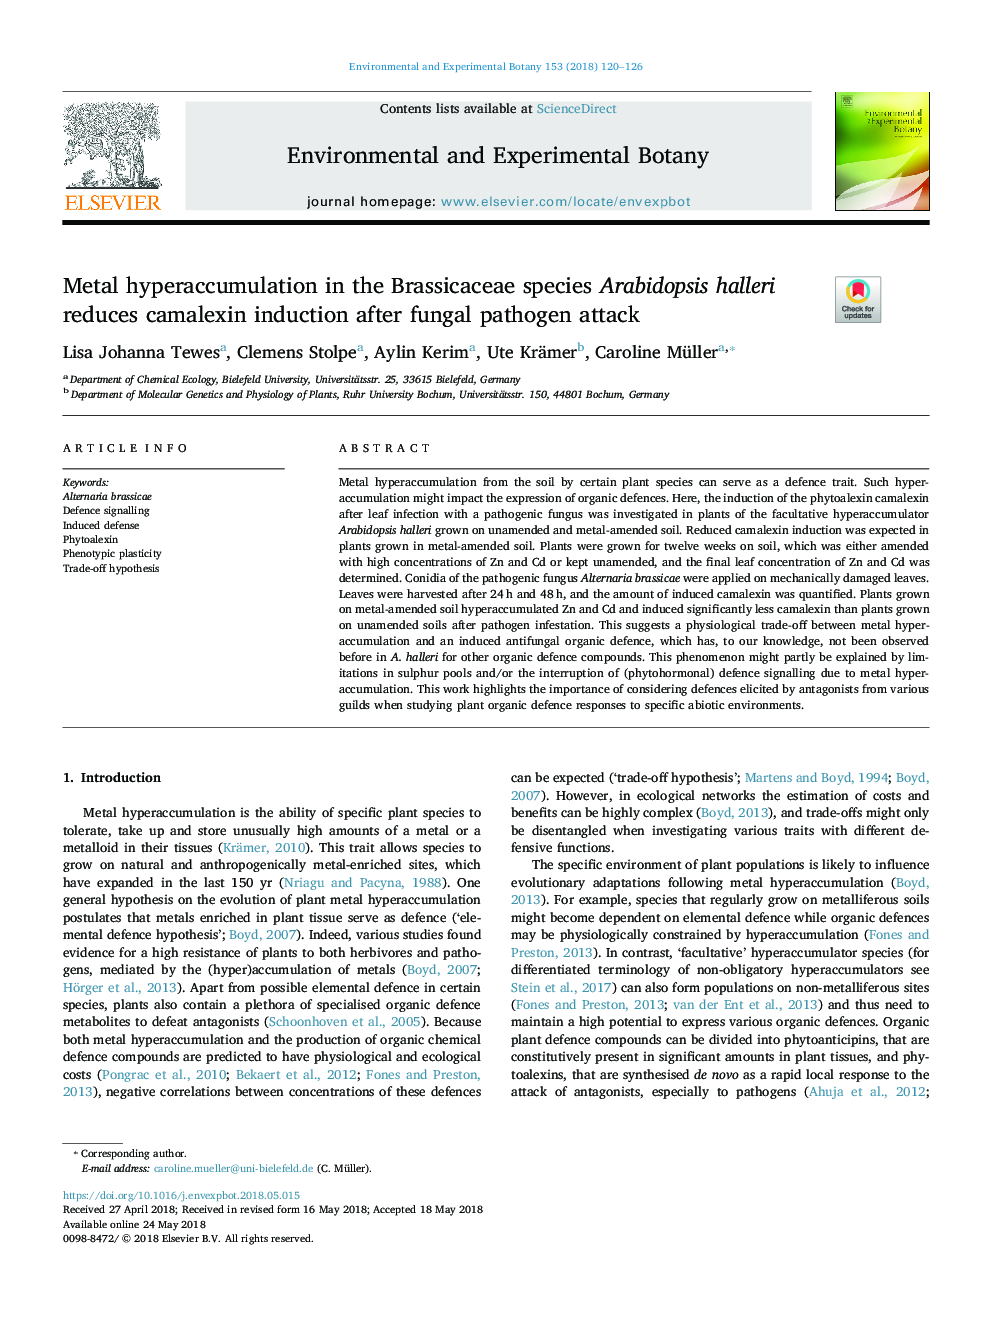 Metal hyperaccumulation in the Brassicaceae species Arabidopsis halleri reduces camalexin induction after fungal pathogen attack